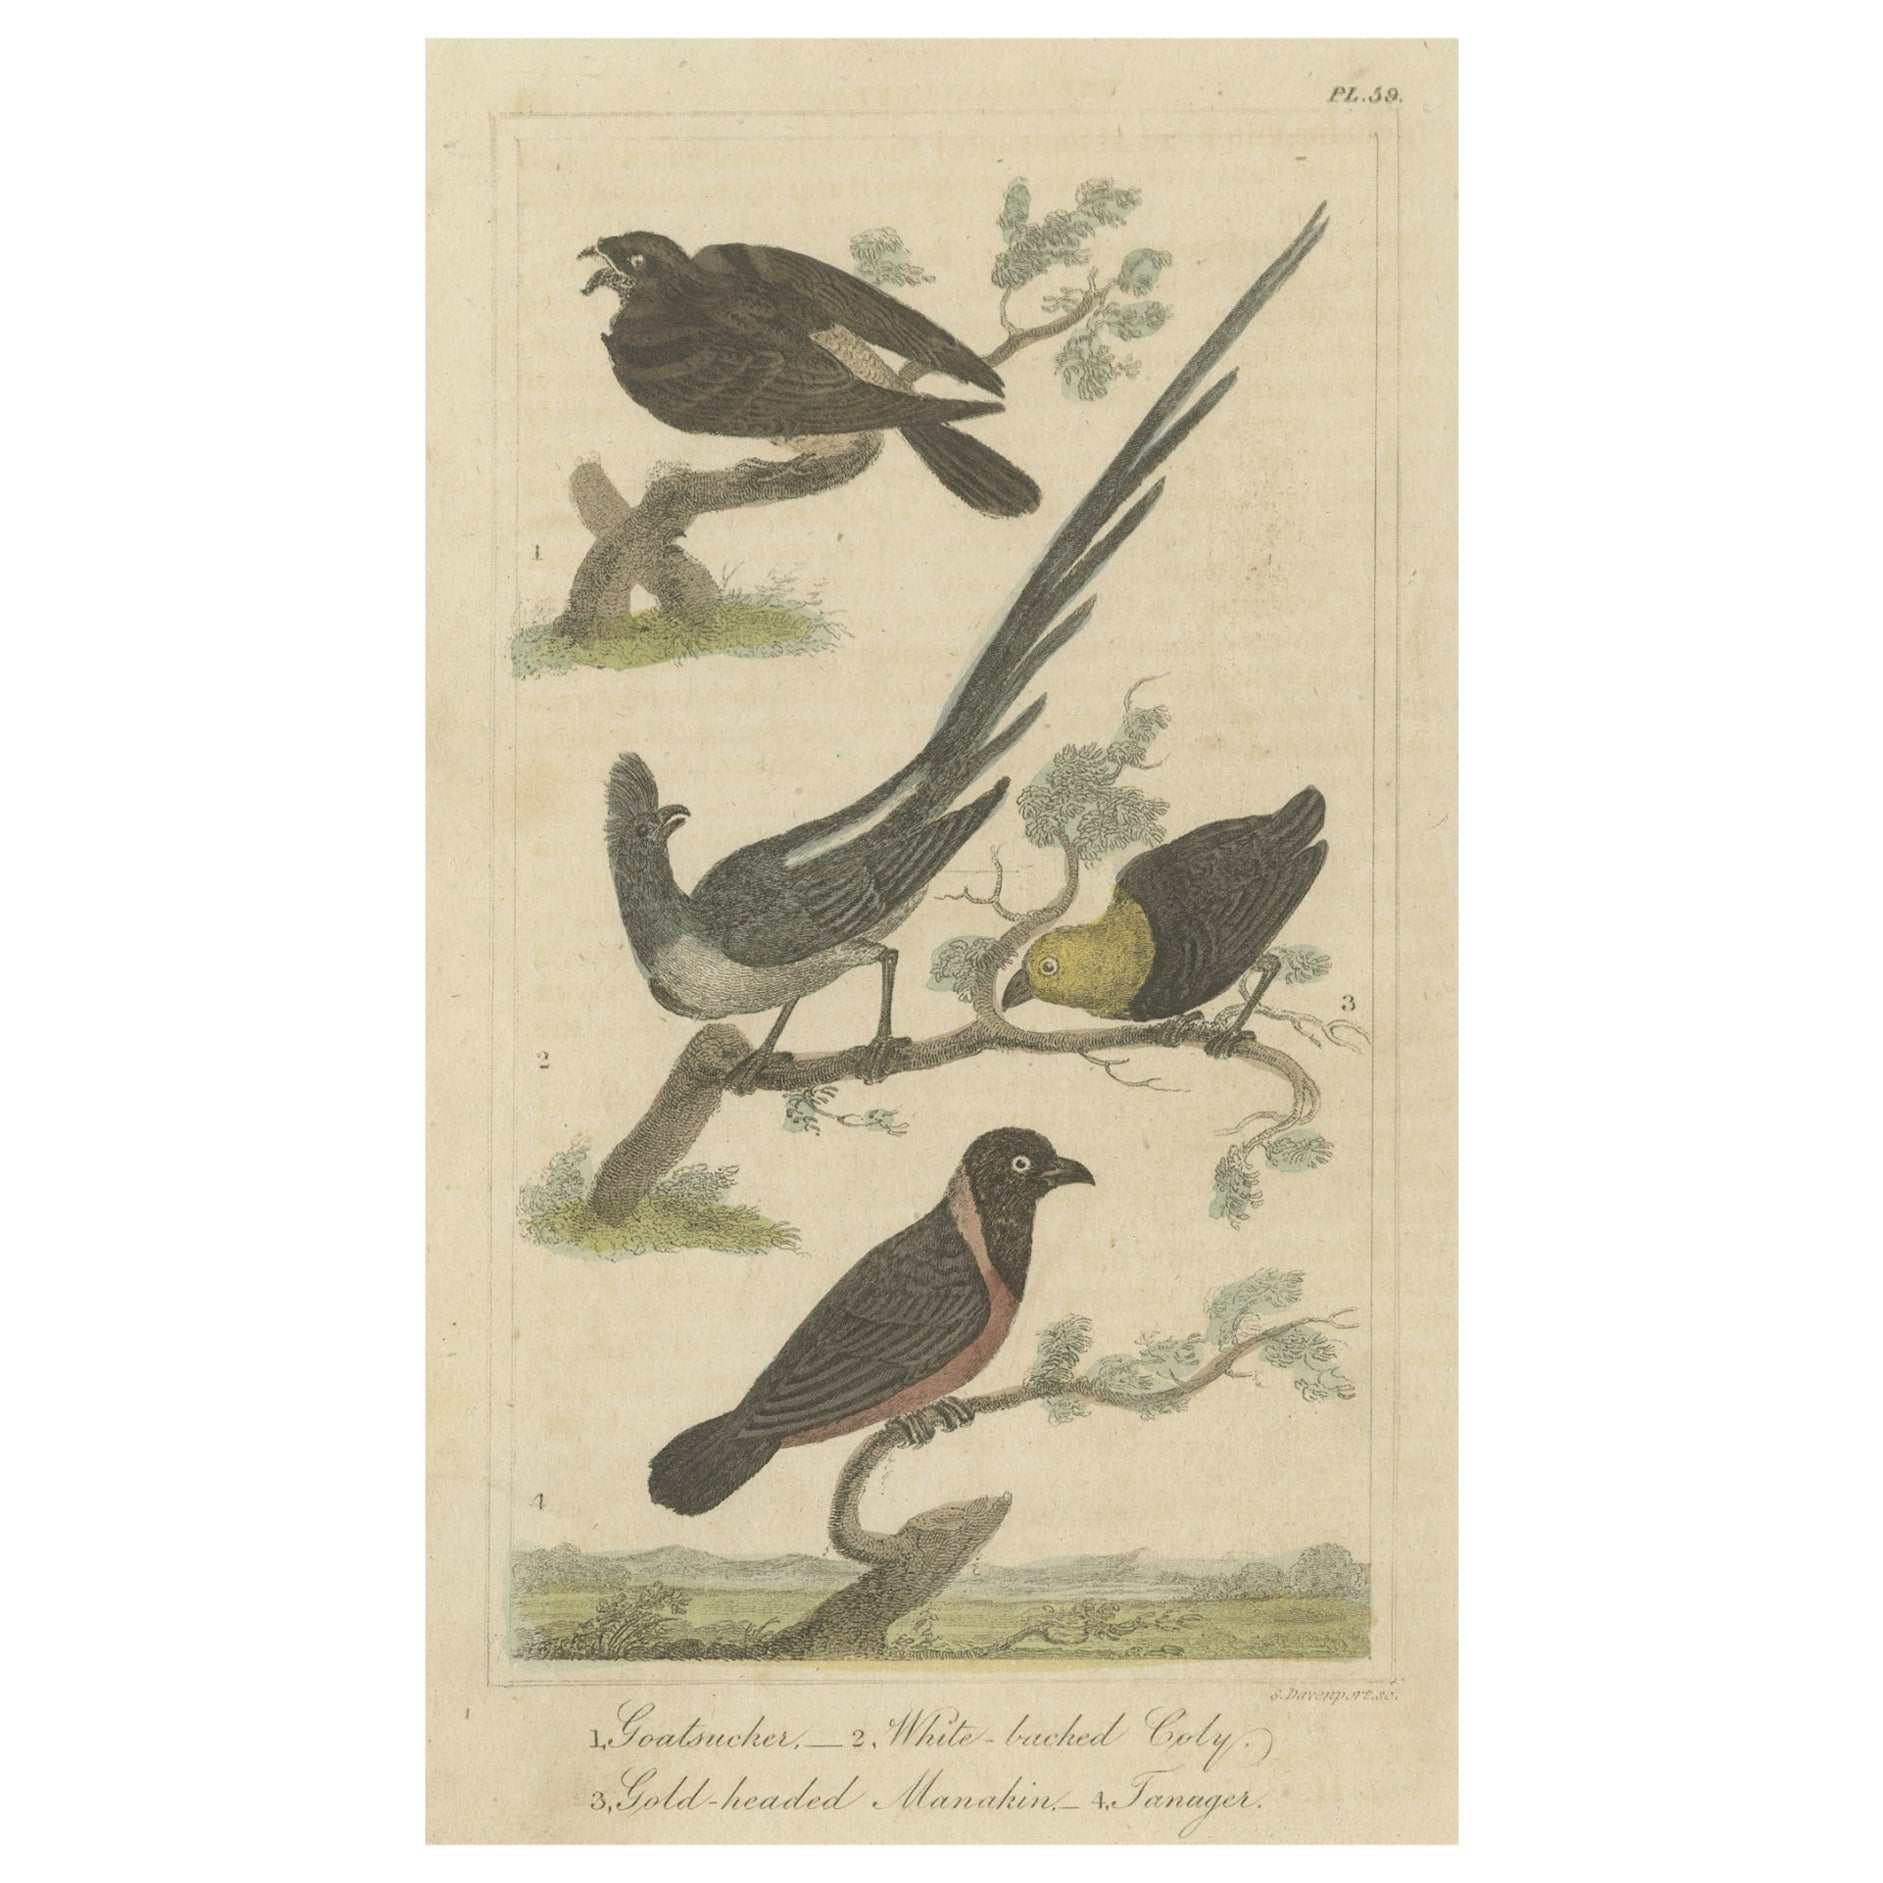 Original Antique Print of a Goatsucker, a Nightjar and Other Birds, 1821